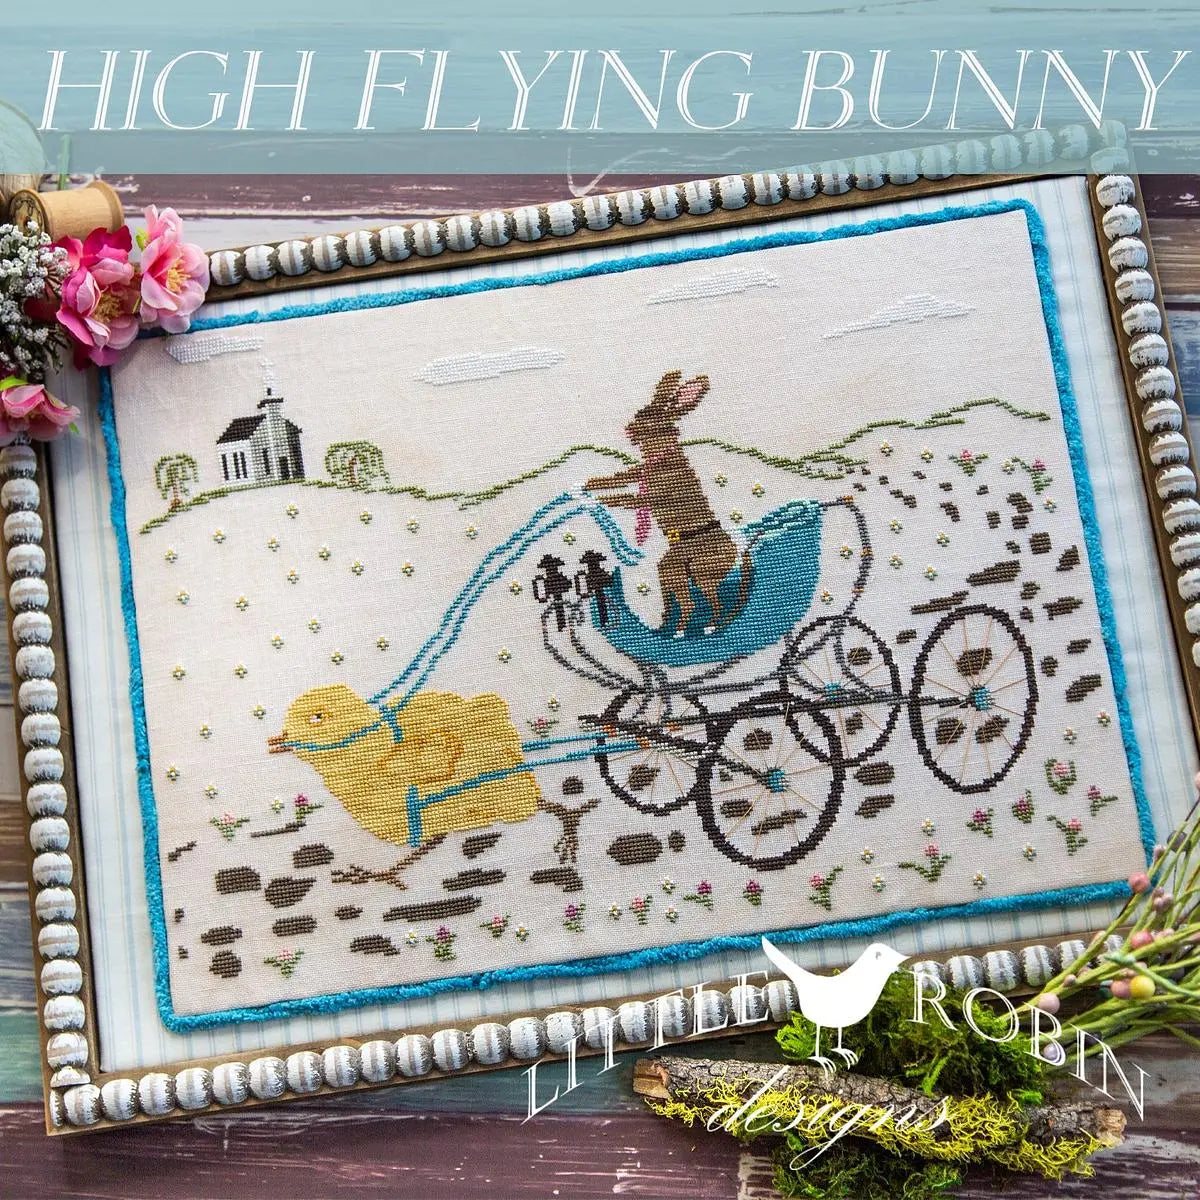 High Flying Bunny by Little Robin Designs (pre-order) Little Robin Designs